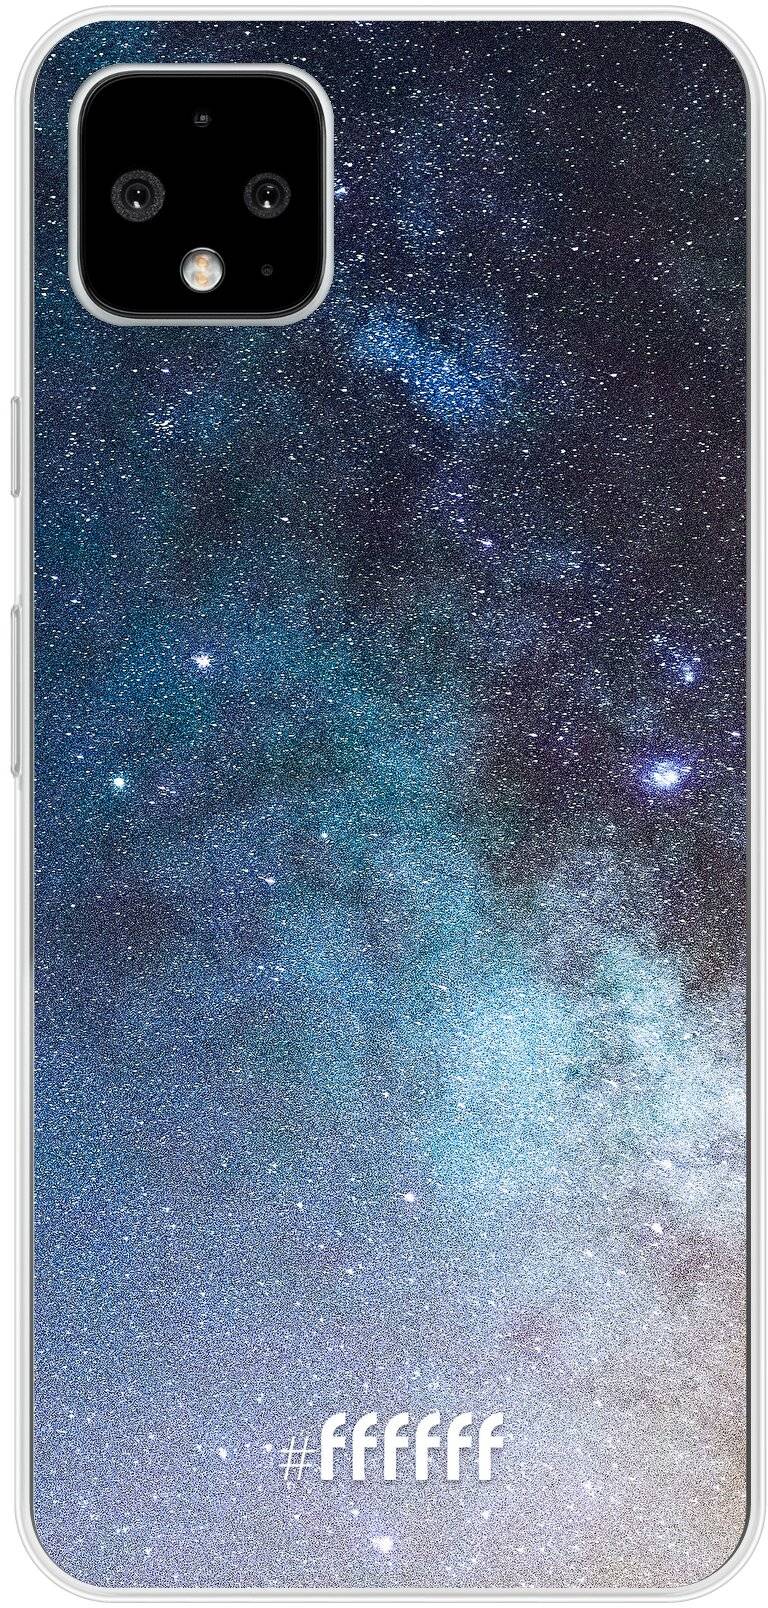 Milky Way Pixel 4 XL